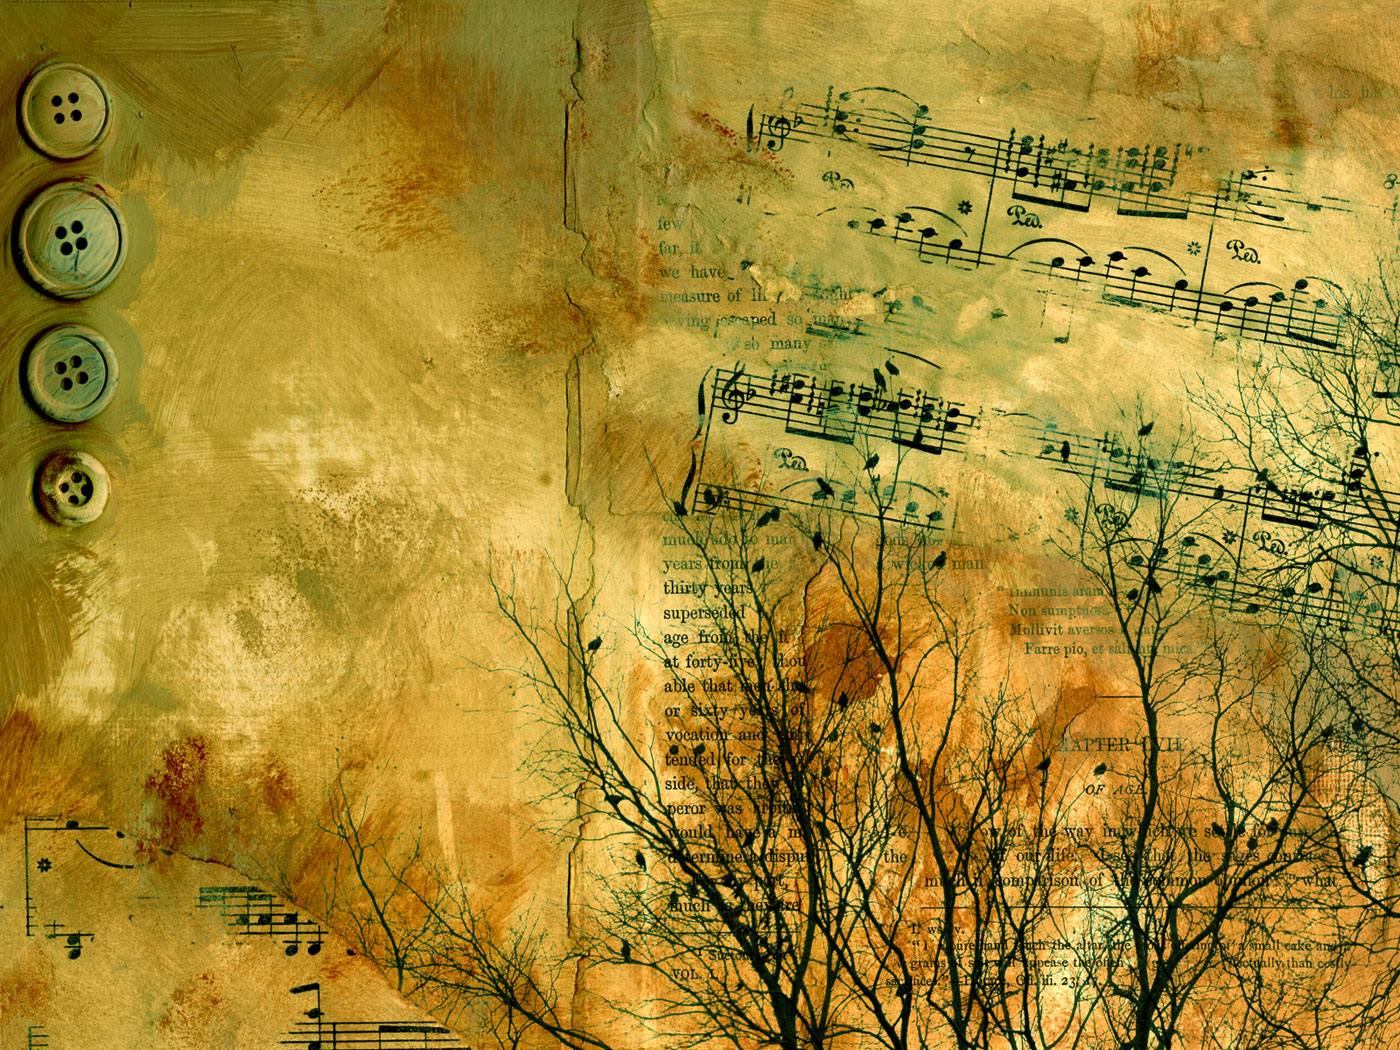 Music Note Wallpaper